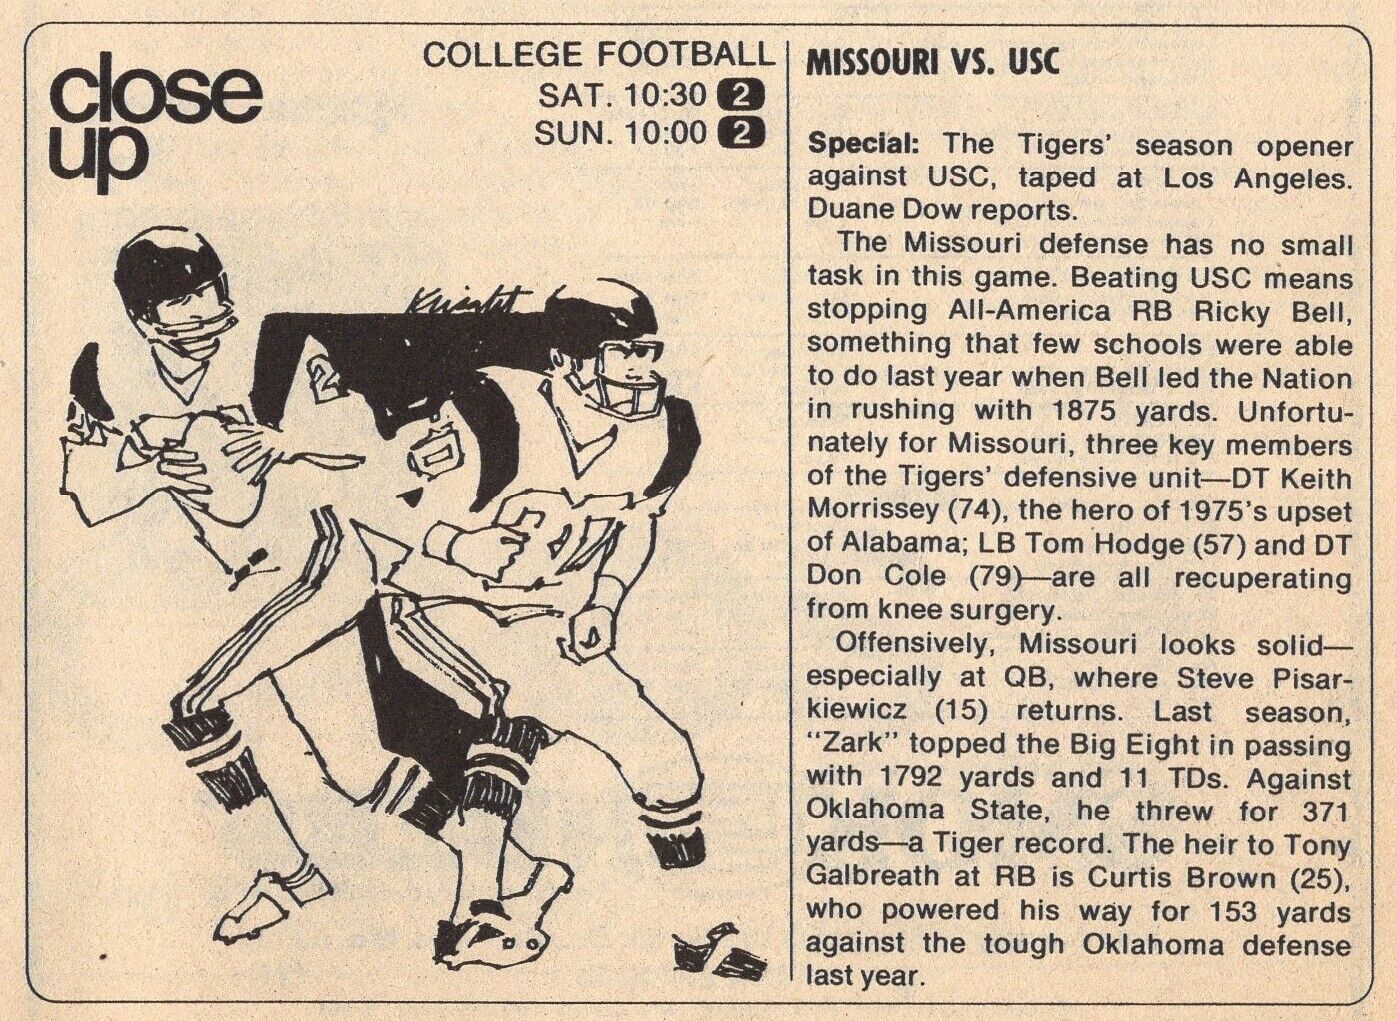 1976 COLLEGE FOOTBALL TV AD MISSOURI TIGERS HAND USC TROJANS ONLY LOSS OF SEASON